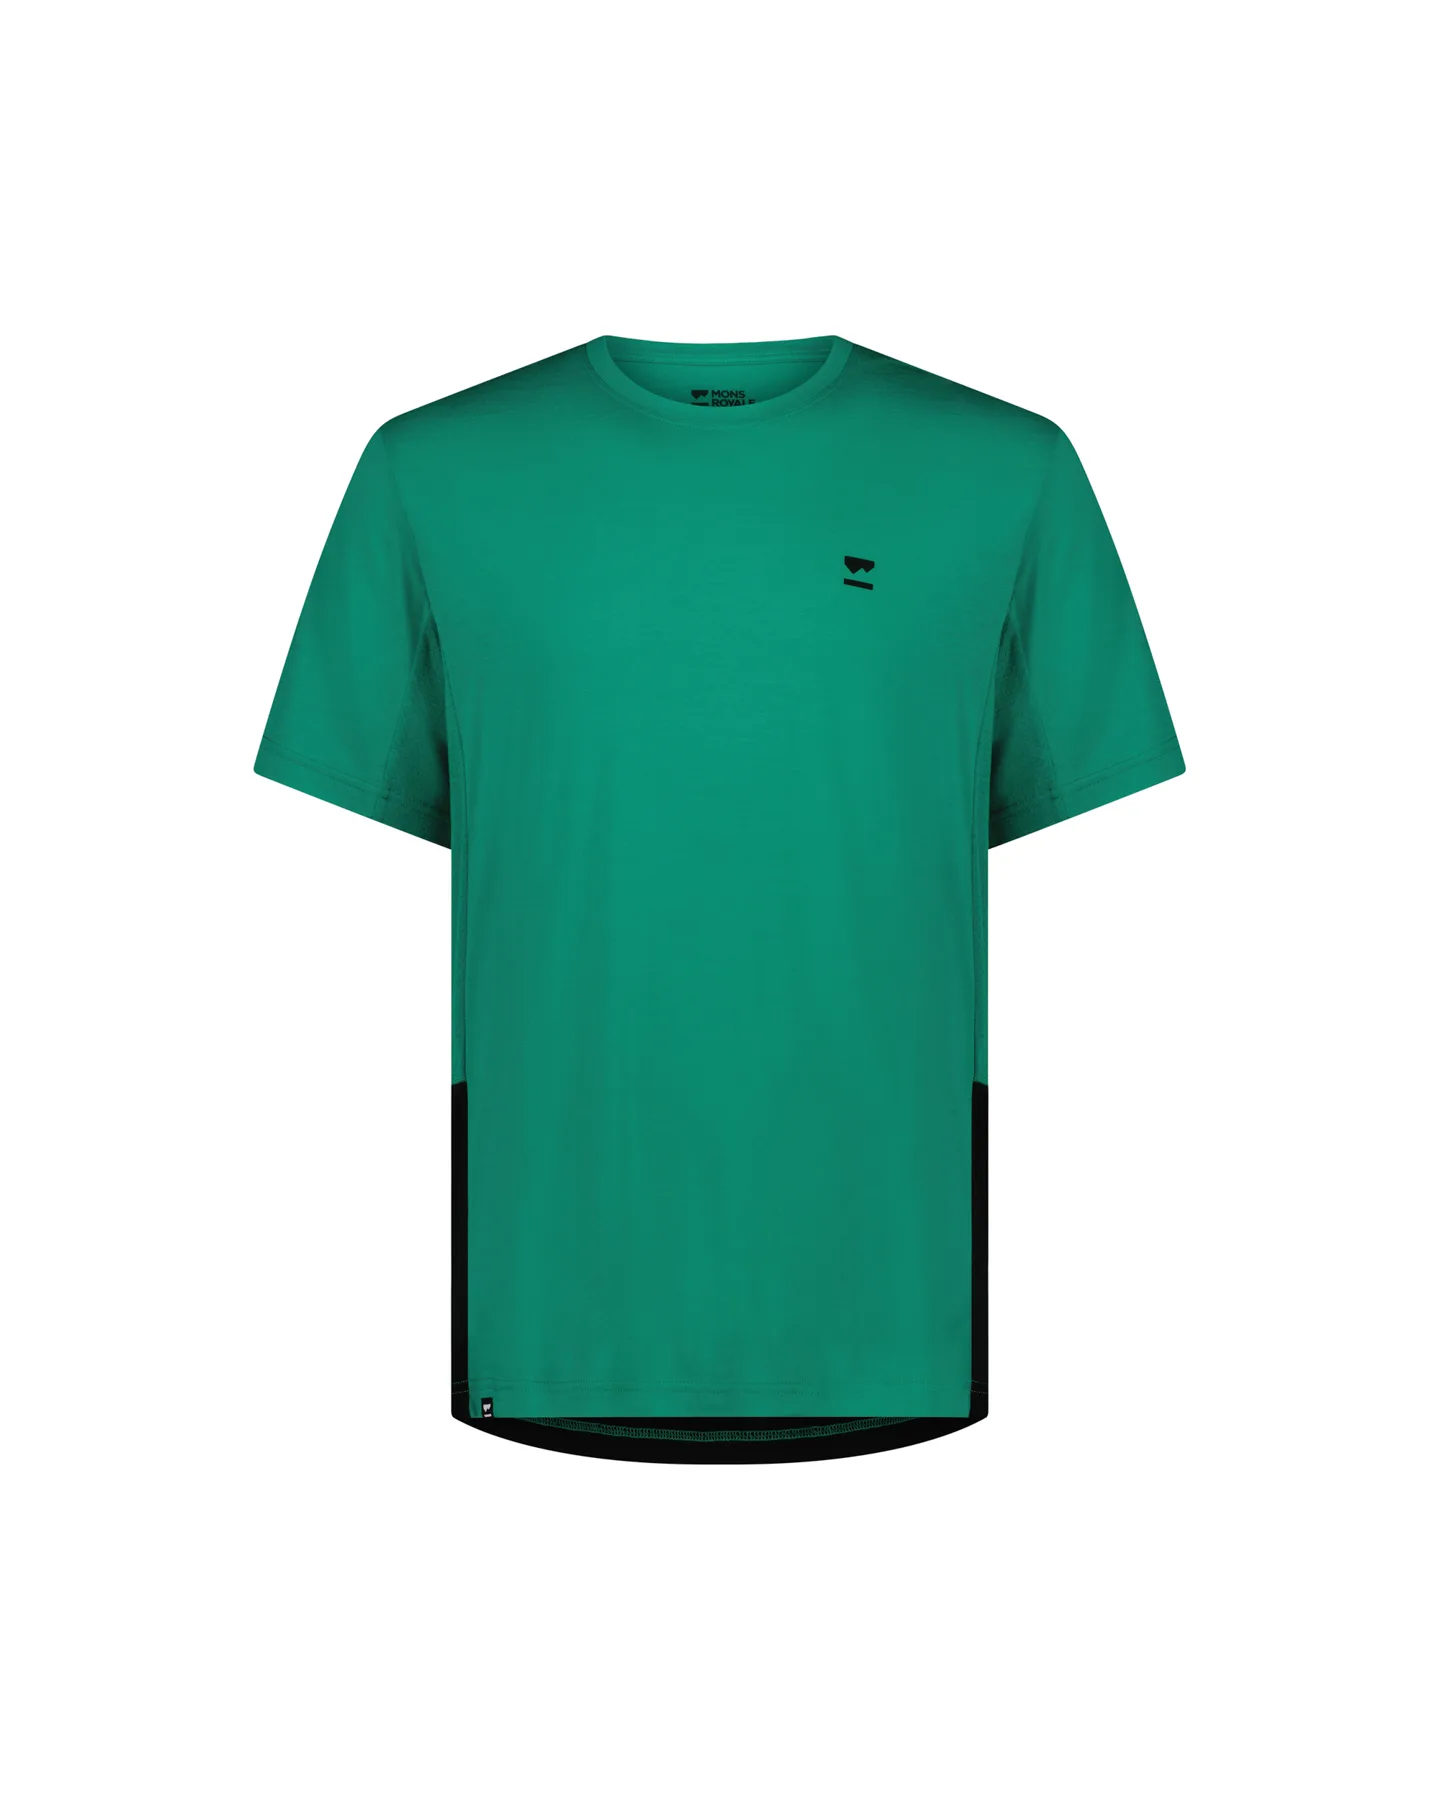 Mons Royale - Tarn Merino Shift T-Shirt - Pop Green / Black - Grøn, Sort M